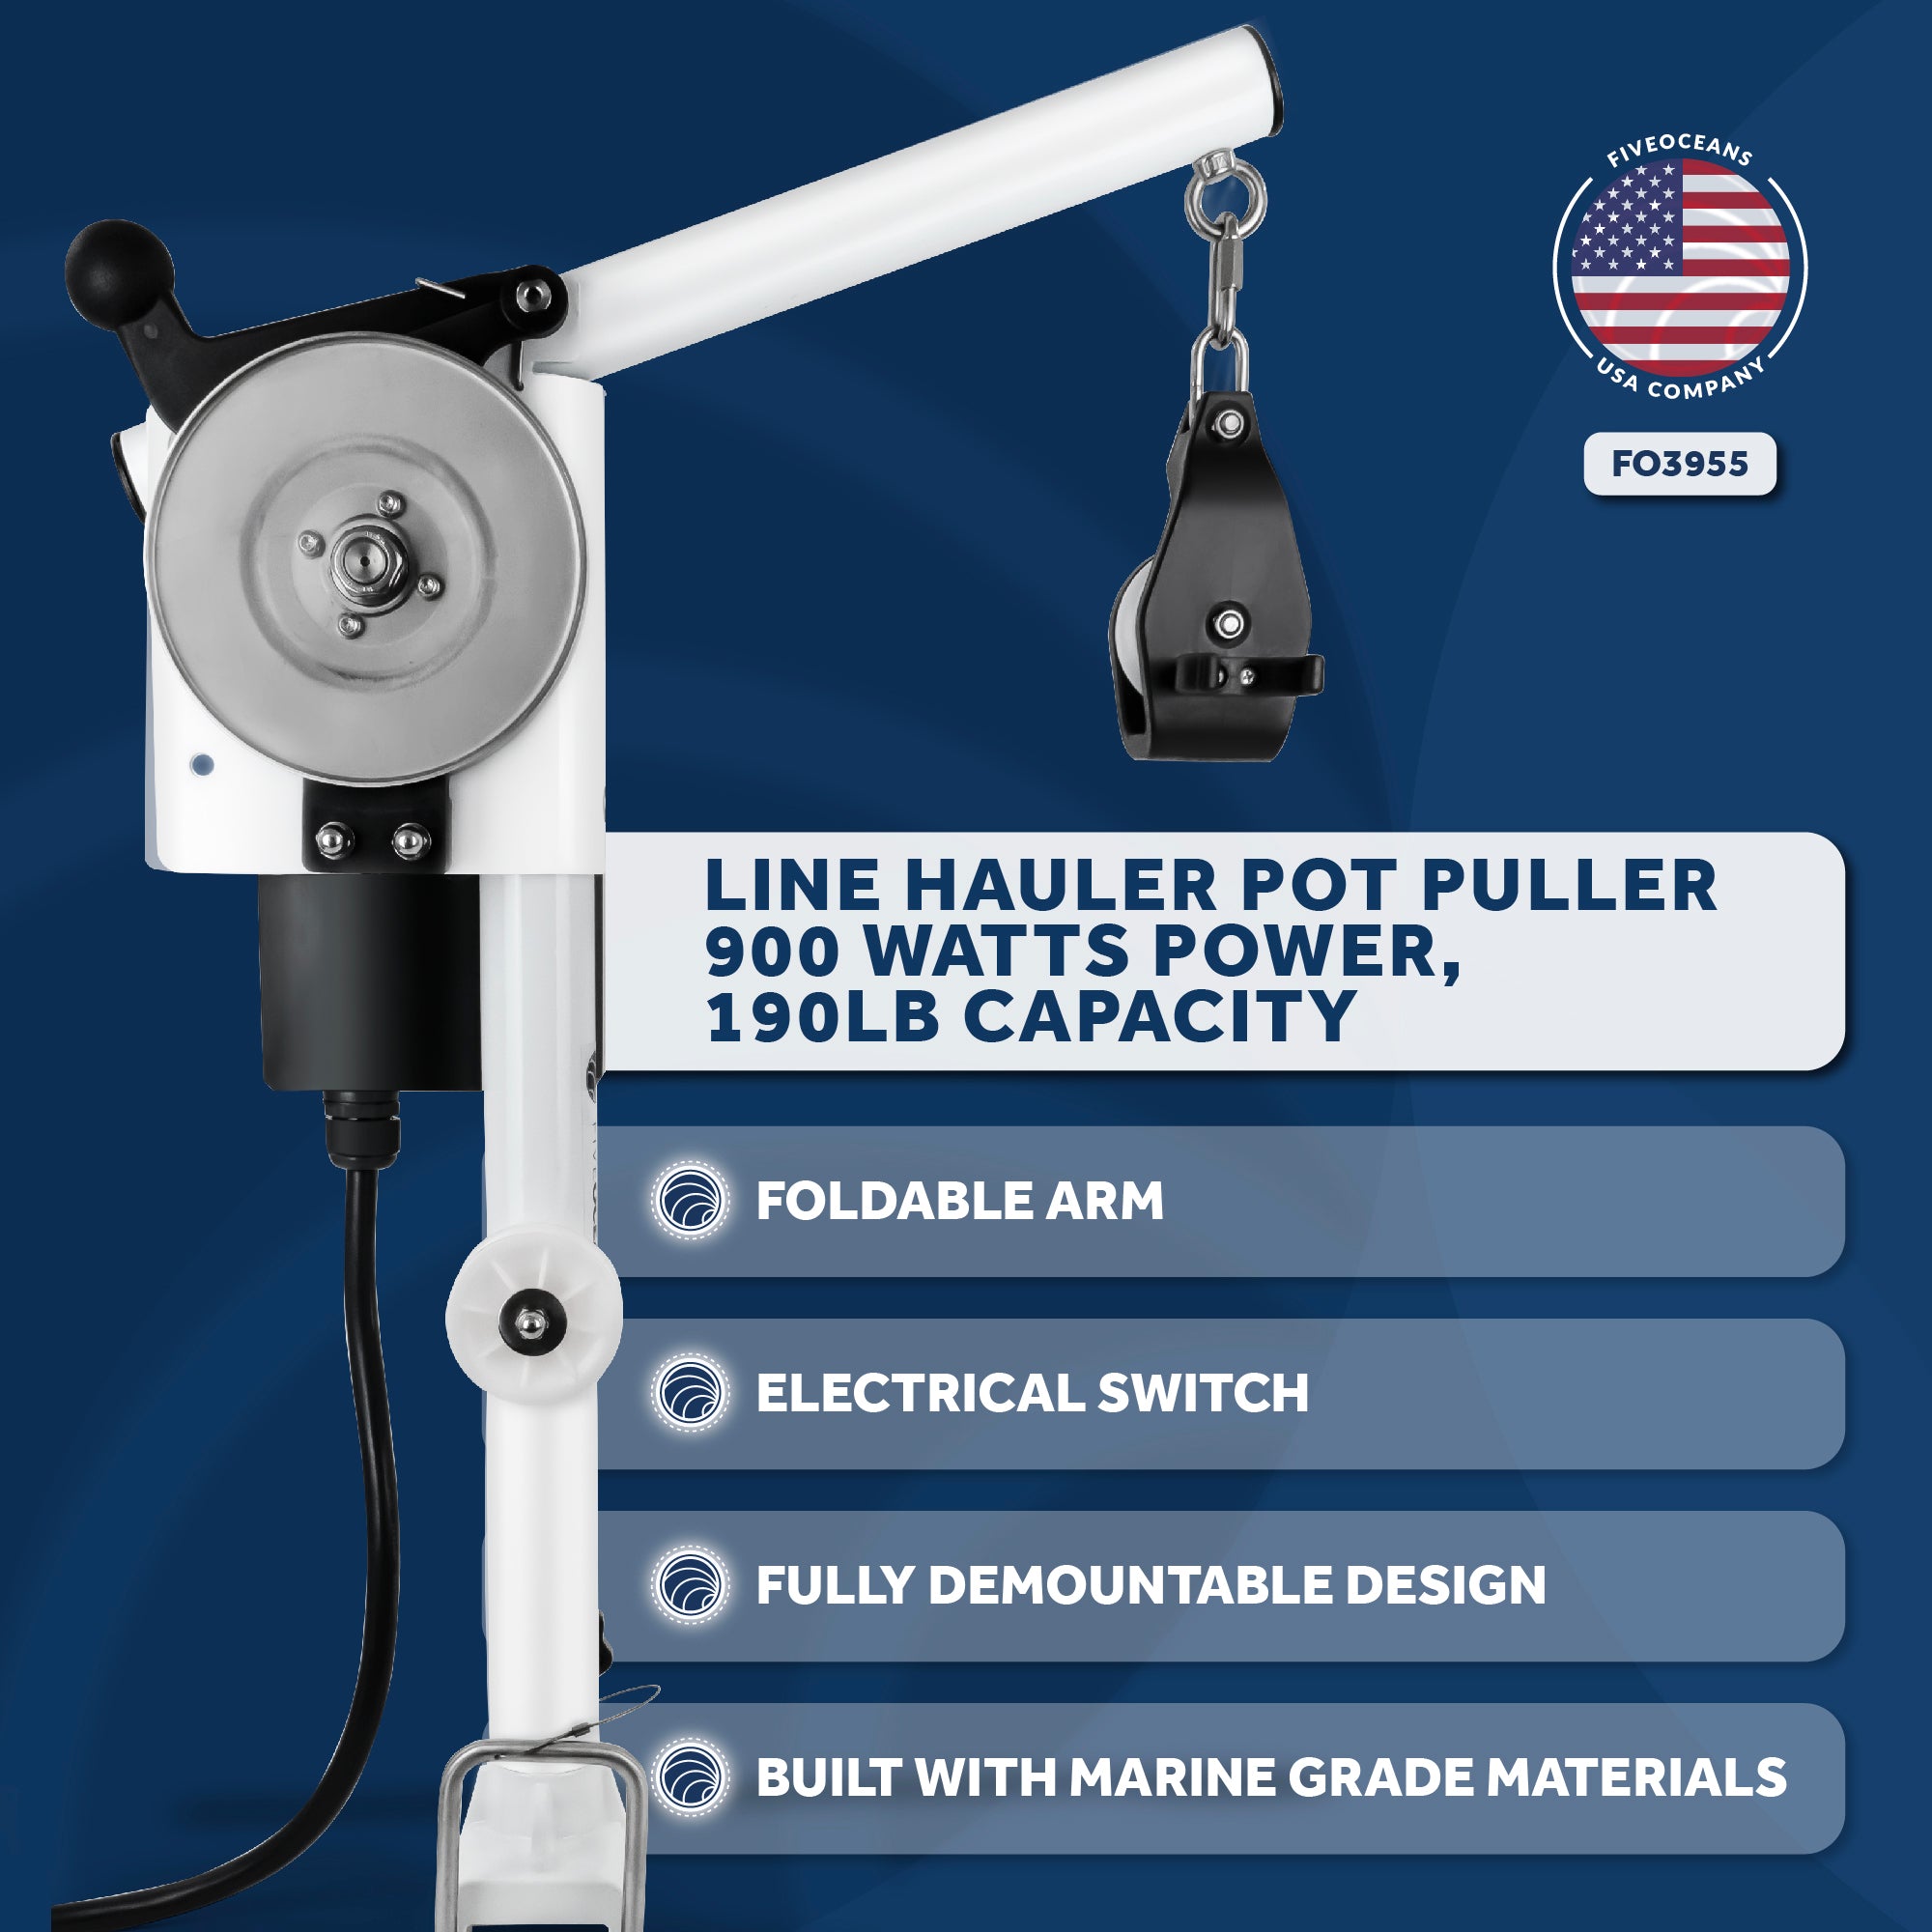 Line Hauler Pot Puller, 900 Watts - FO3955